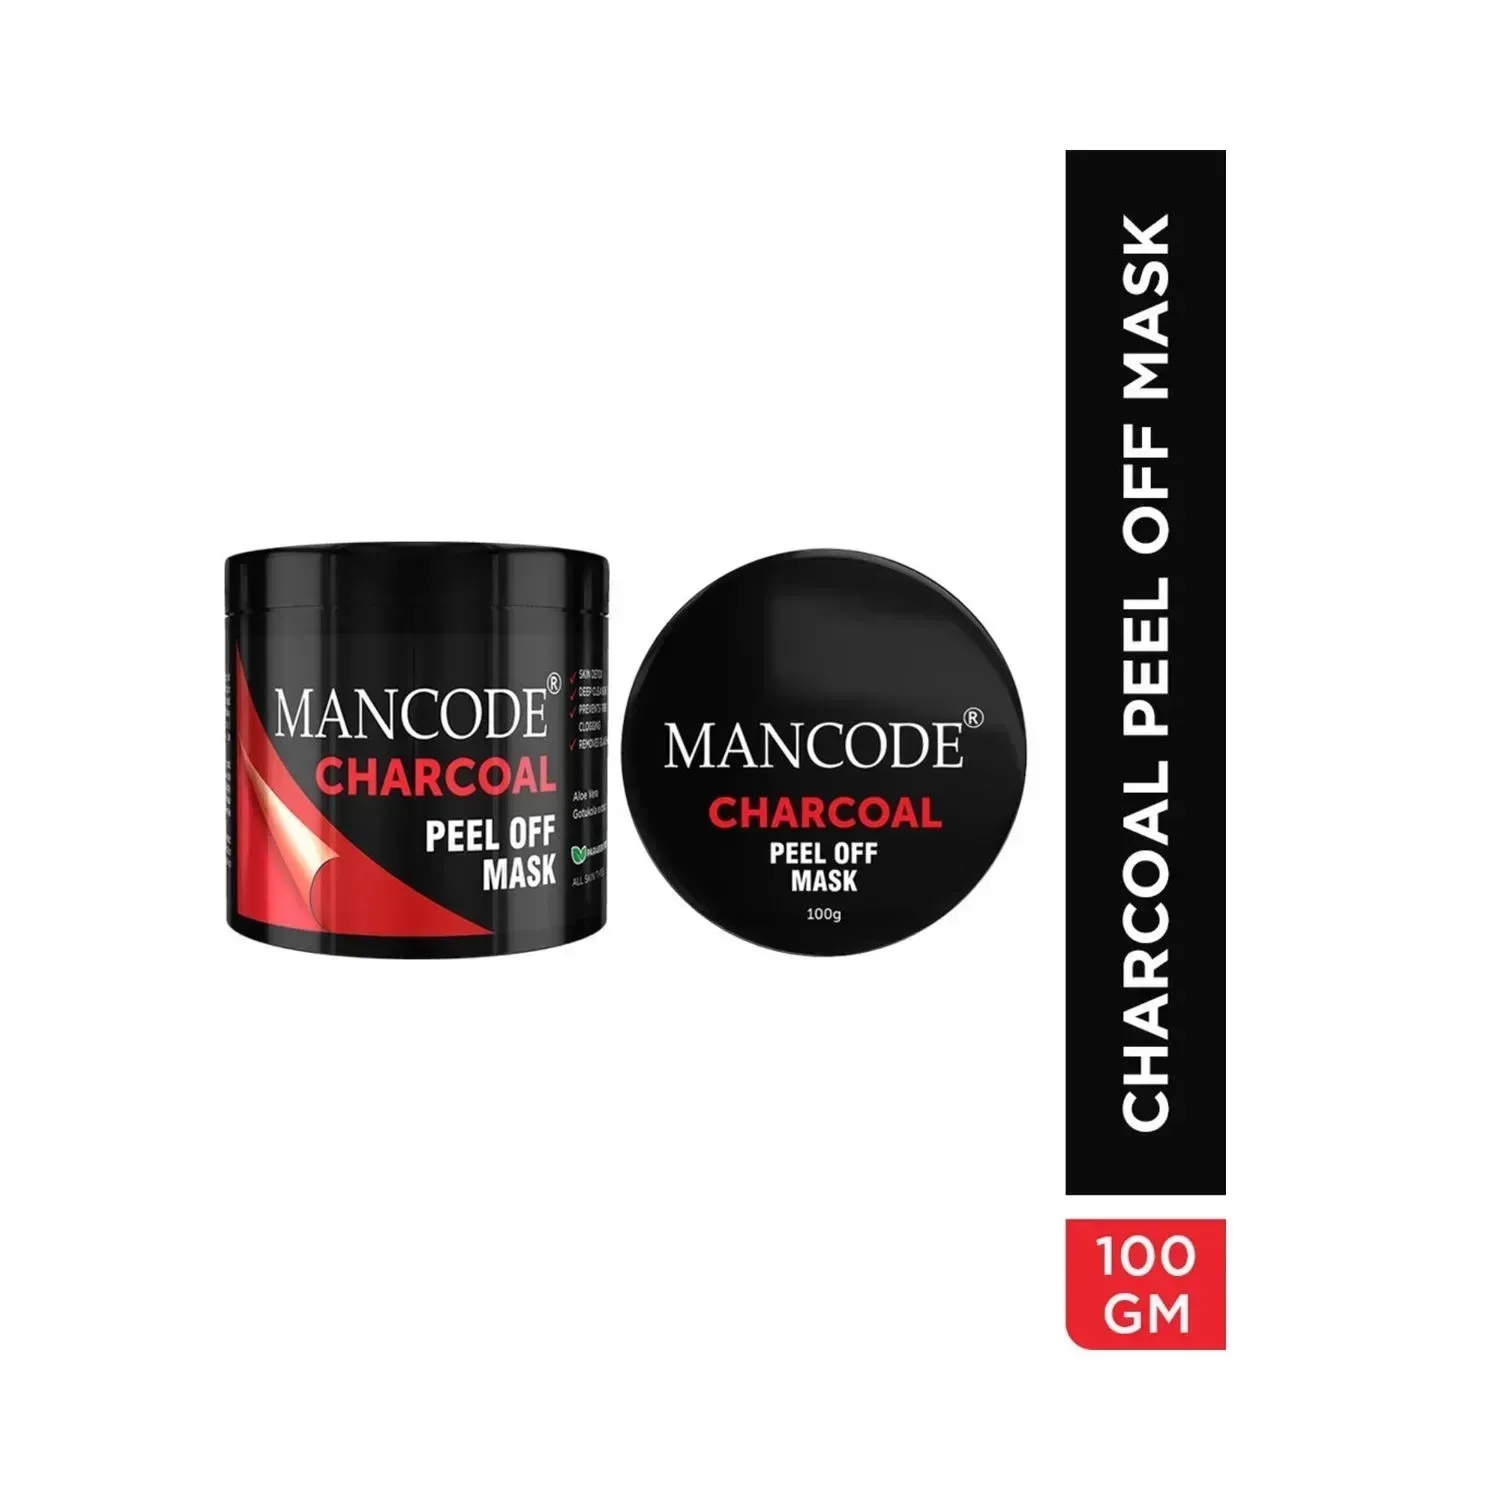 Mancode Charcoal Peel Off Mask - (100g)